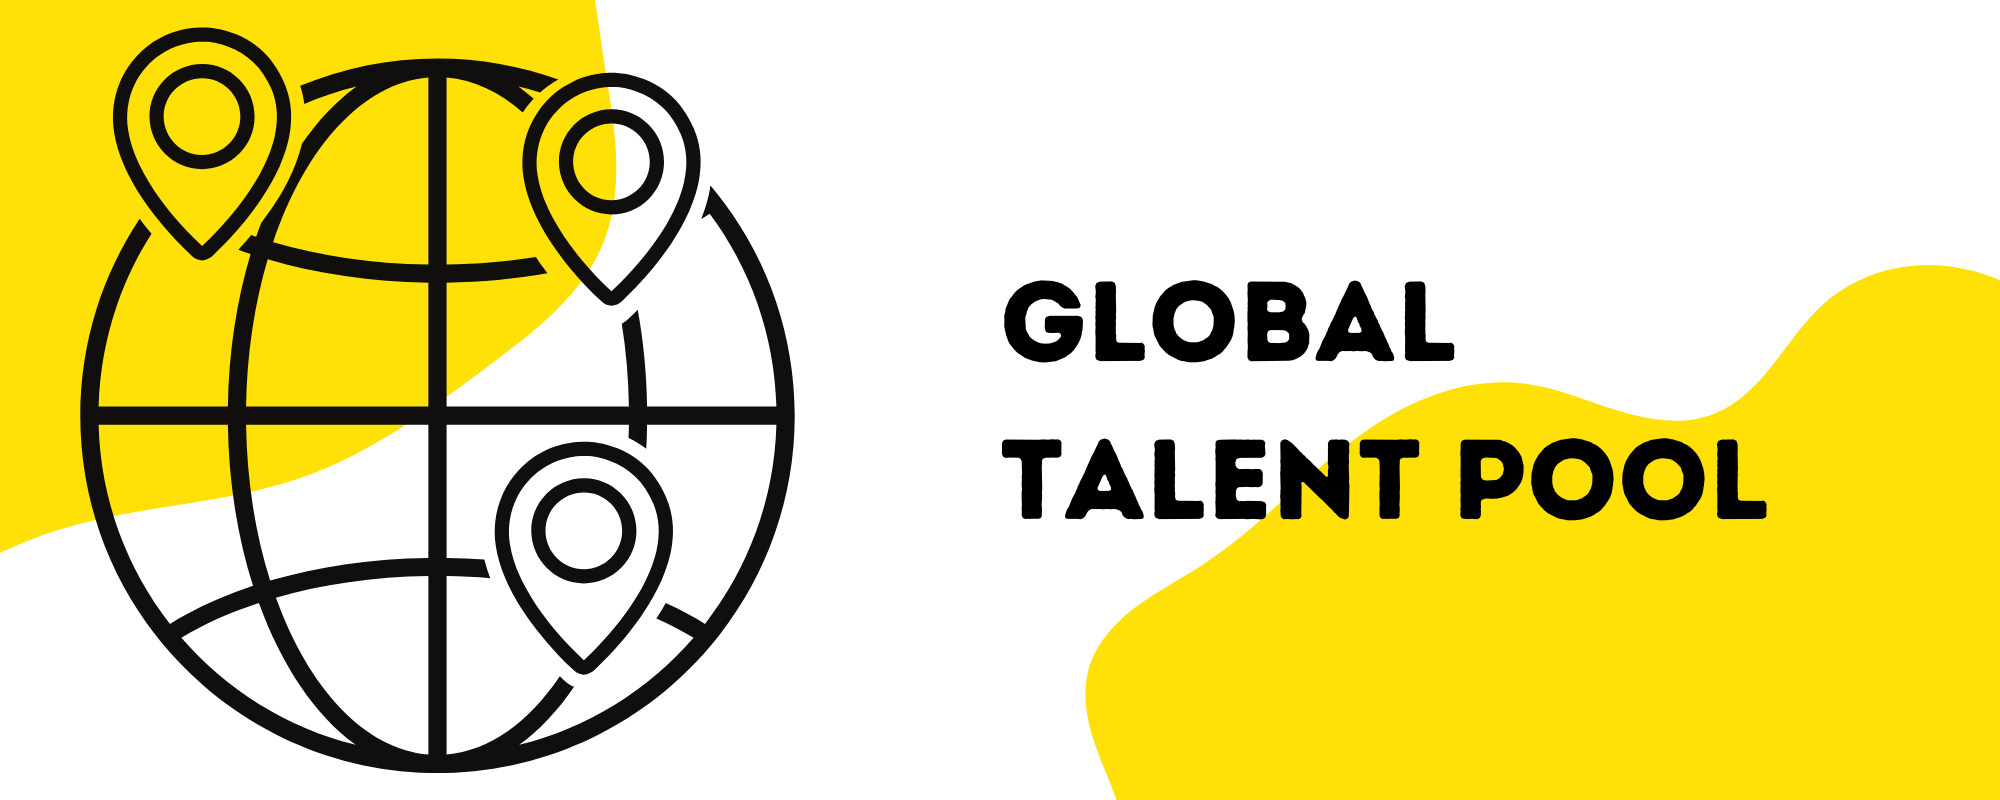 Global talent pool